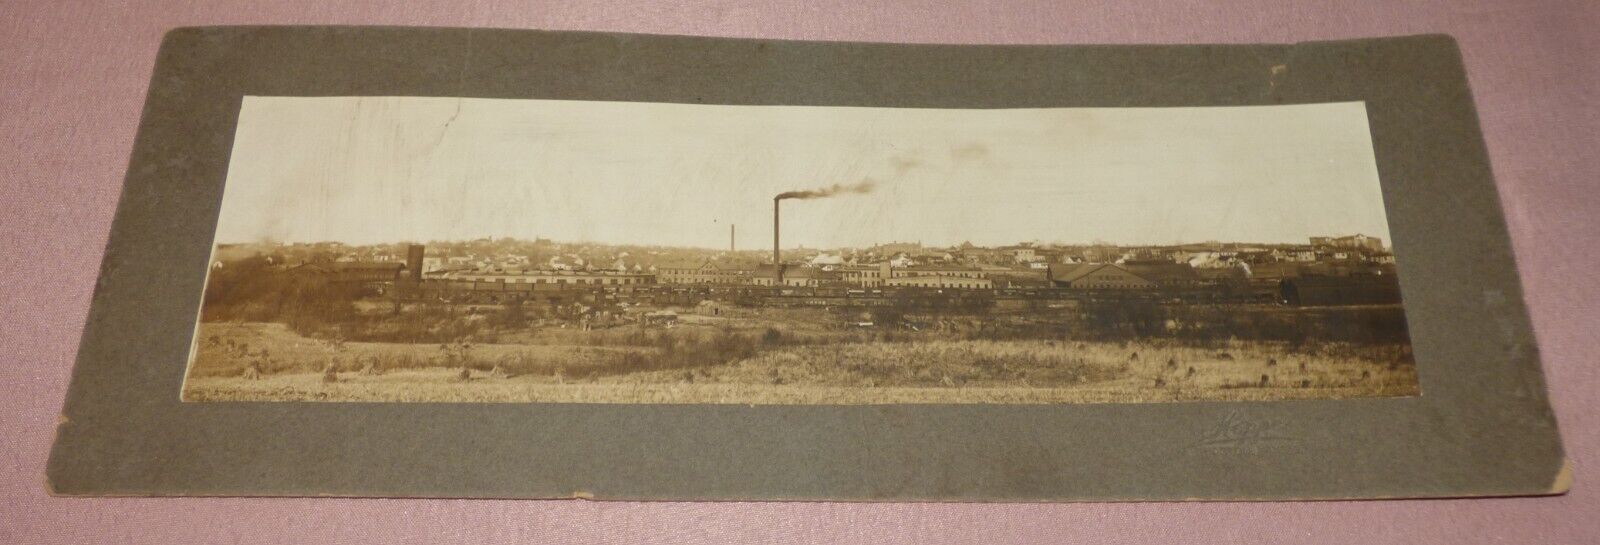 Real Vintage Panoramic Photo of Horton Kansas Rock Island Railroad Yards, Shops